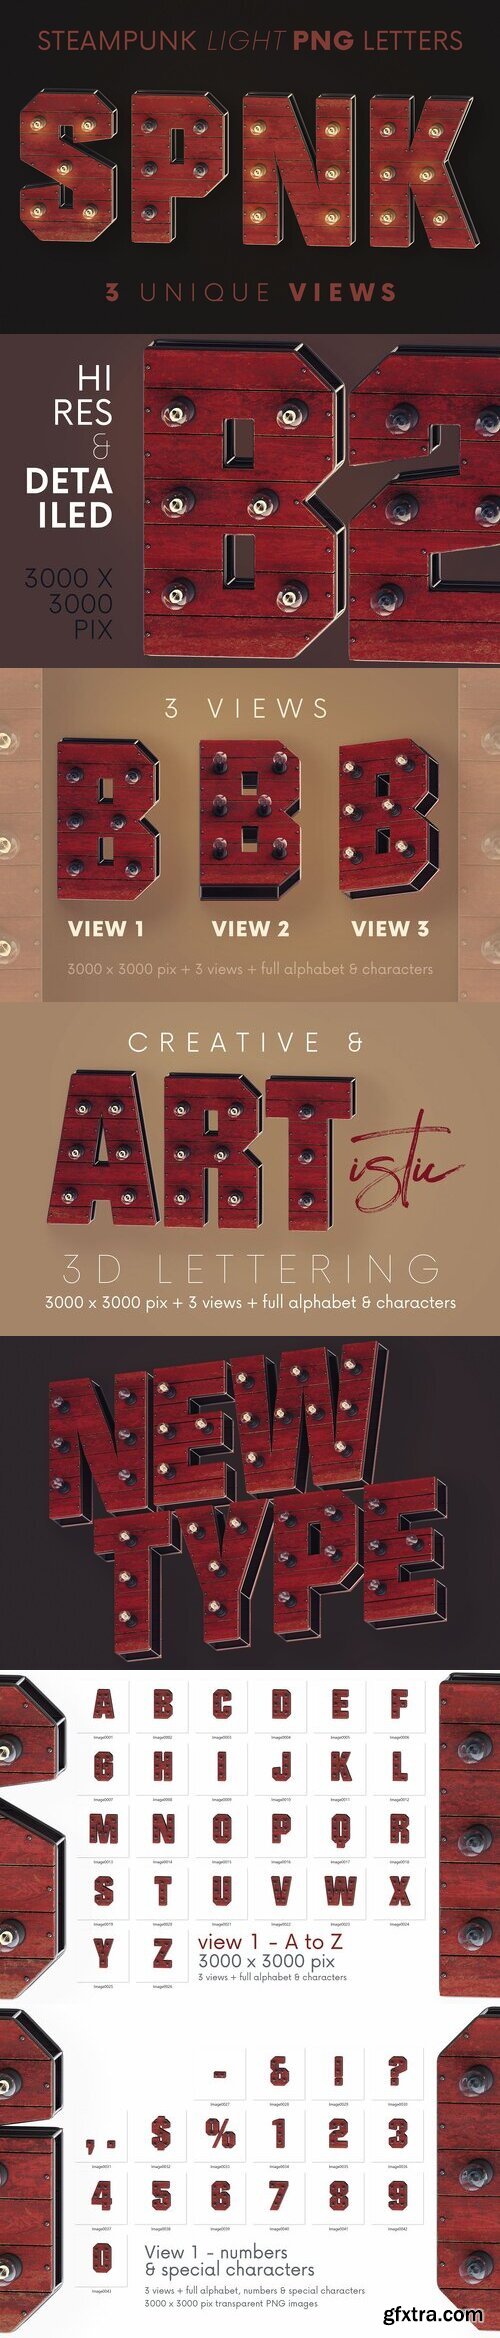 Creativemarket - Steampunk Light - 3D Lettering 6221185